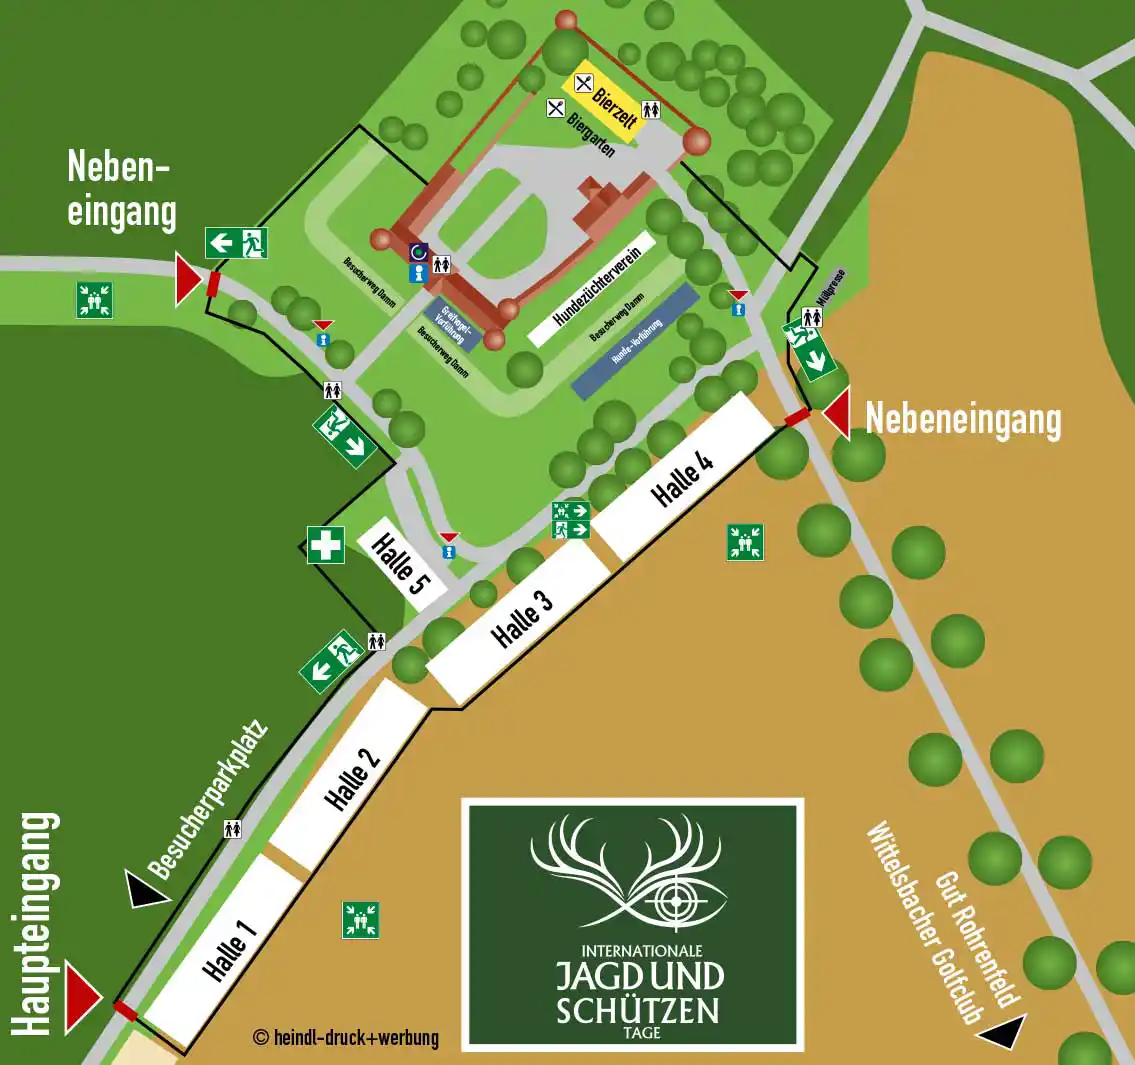 Map of the location of the Jagd und Schützentage hunting fair